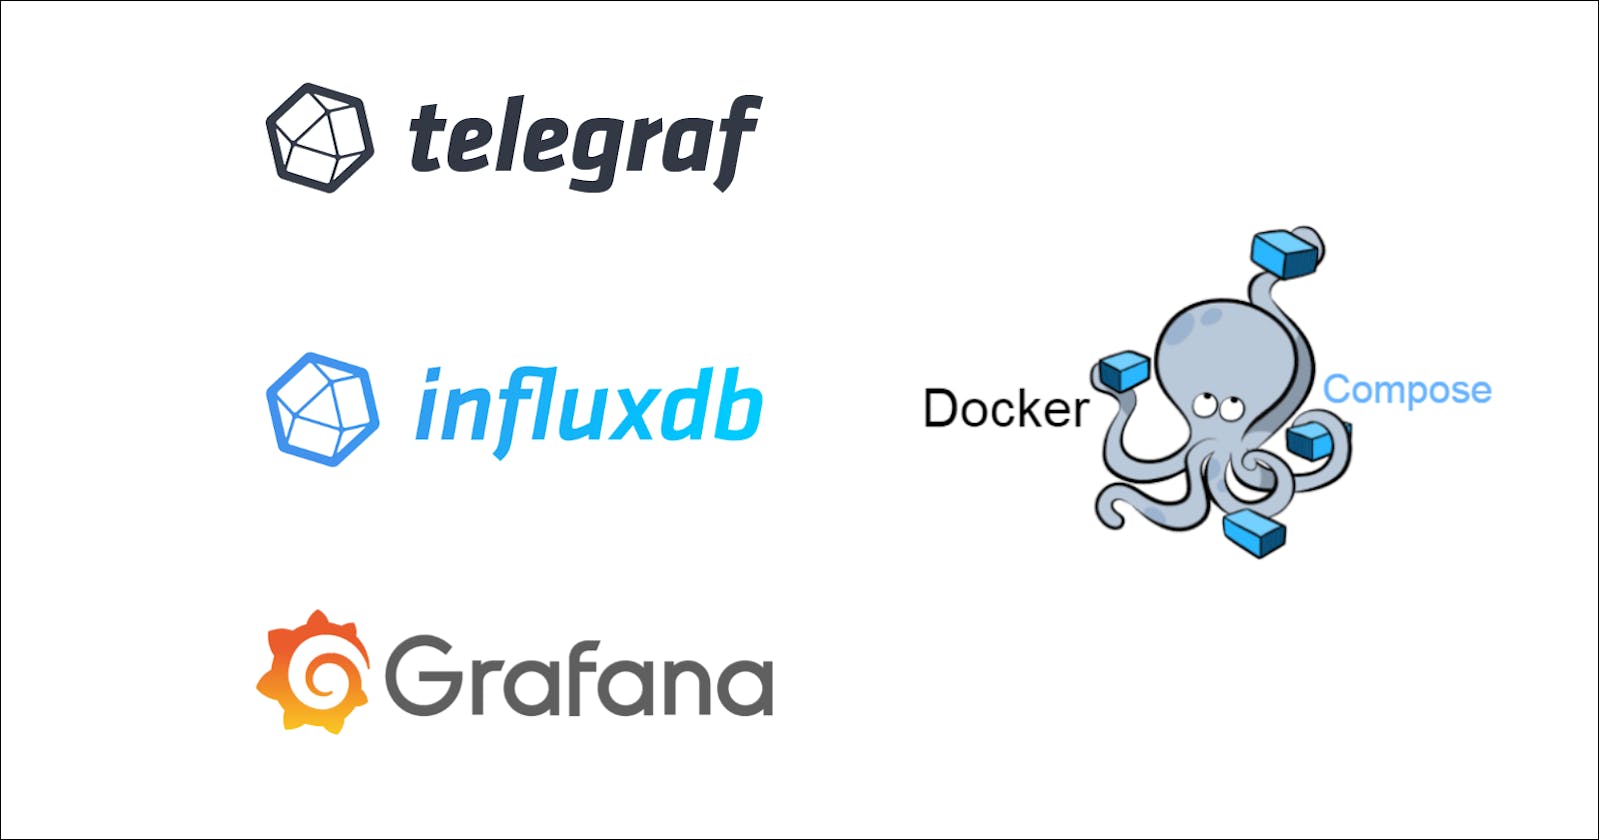 Run Telegraf - InfluxDB - Grafana stack through docker compose